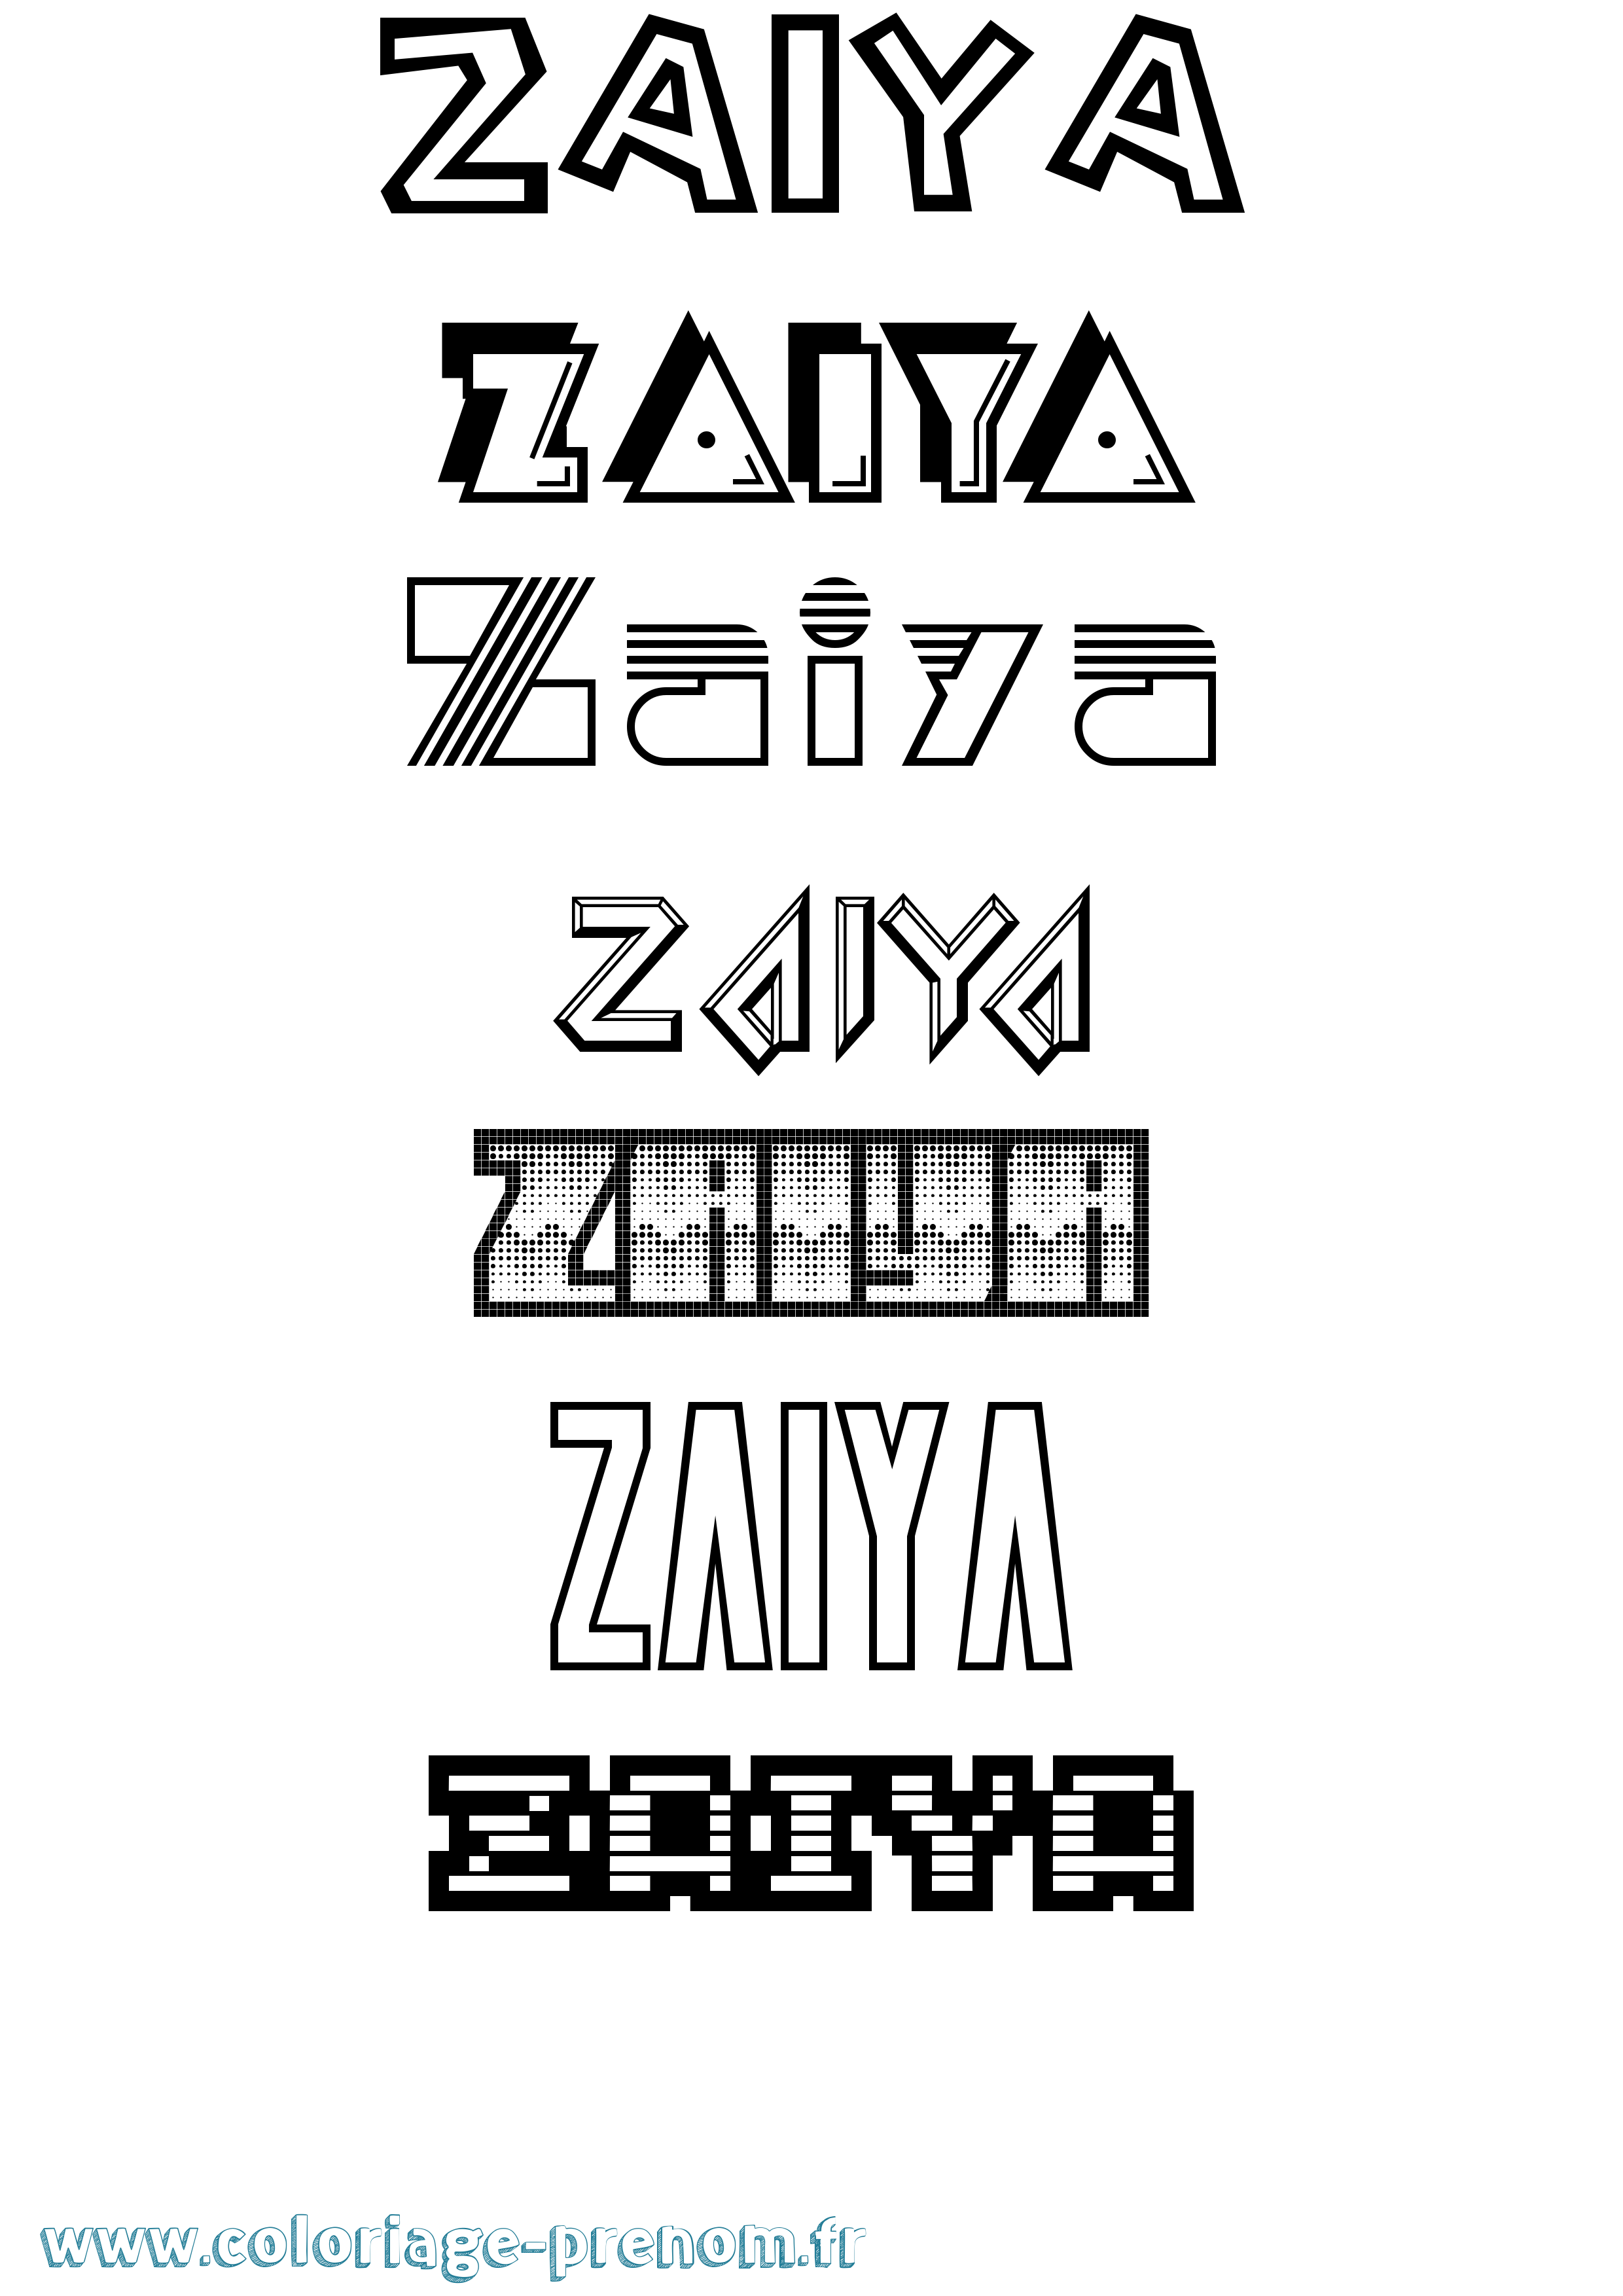 Coloriage prénom Zaiya Jeux Vidéos